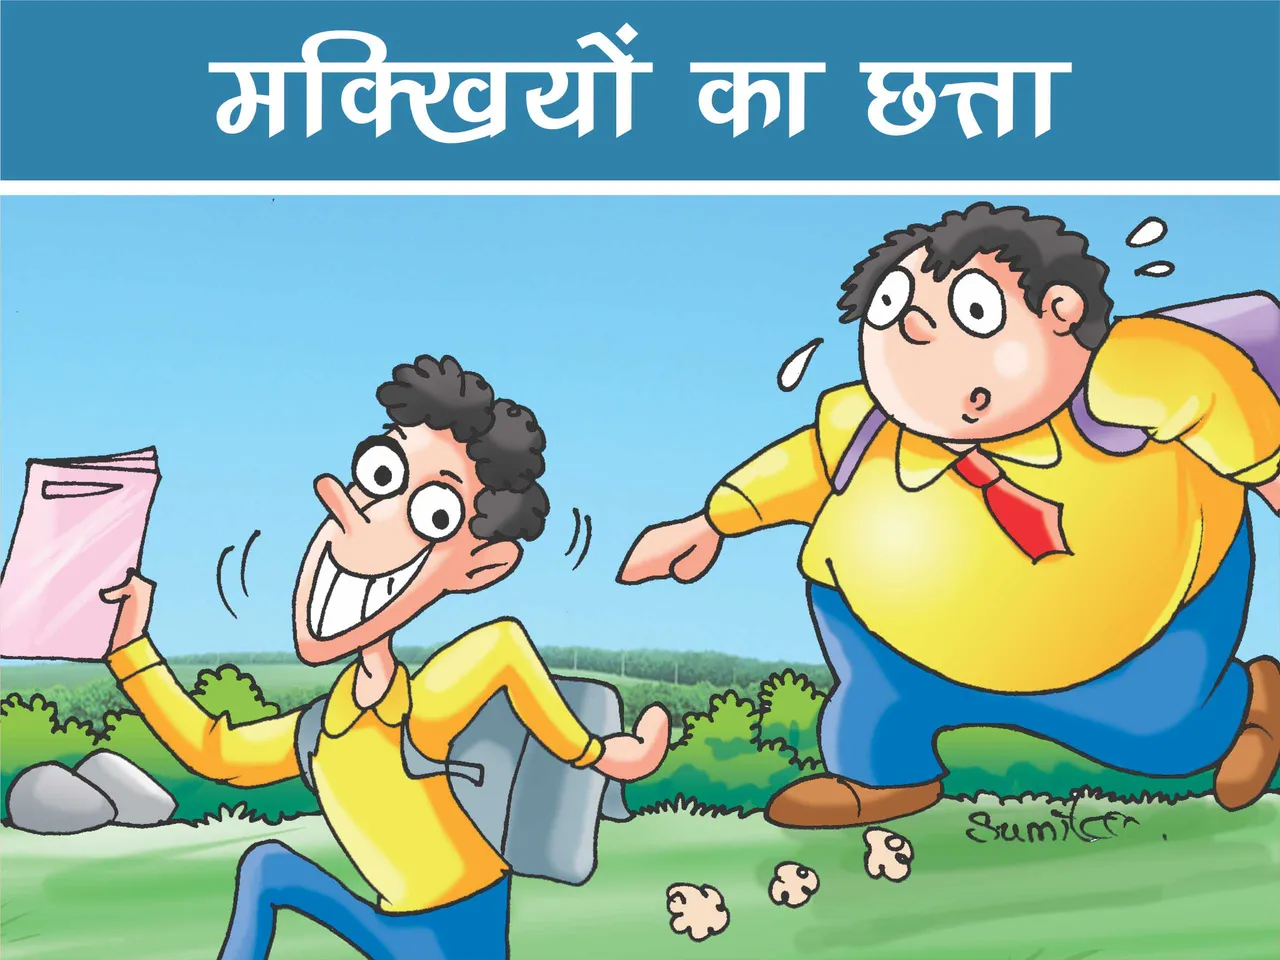 Two School boys cartoon image